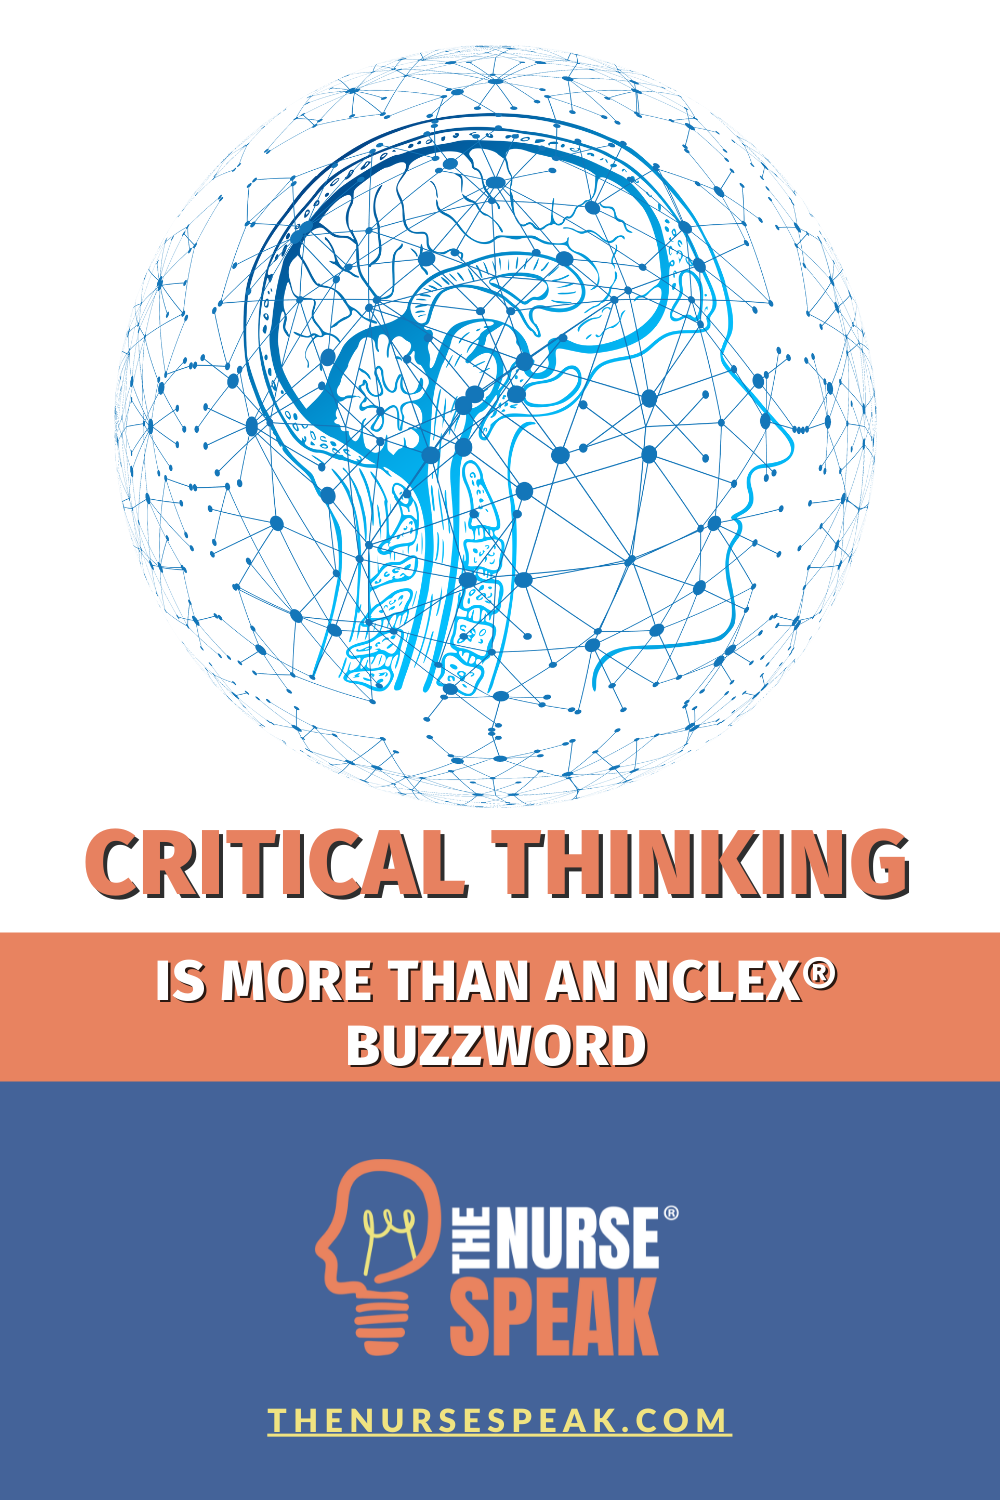 Critical Thinking is More than an NCLEX® Buzzword